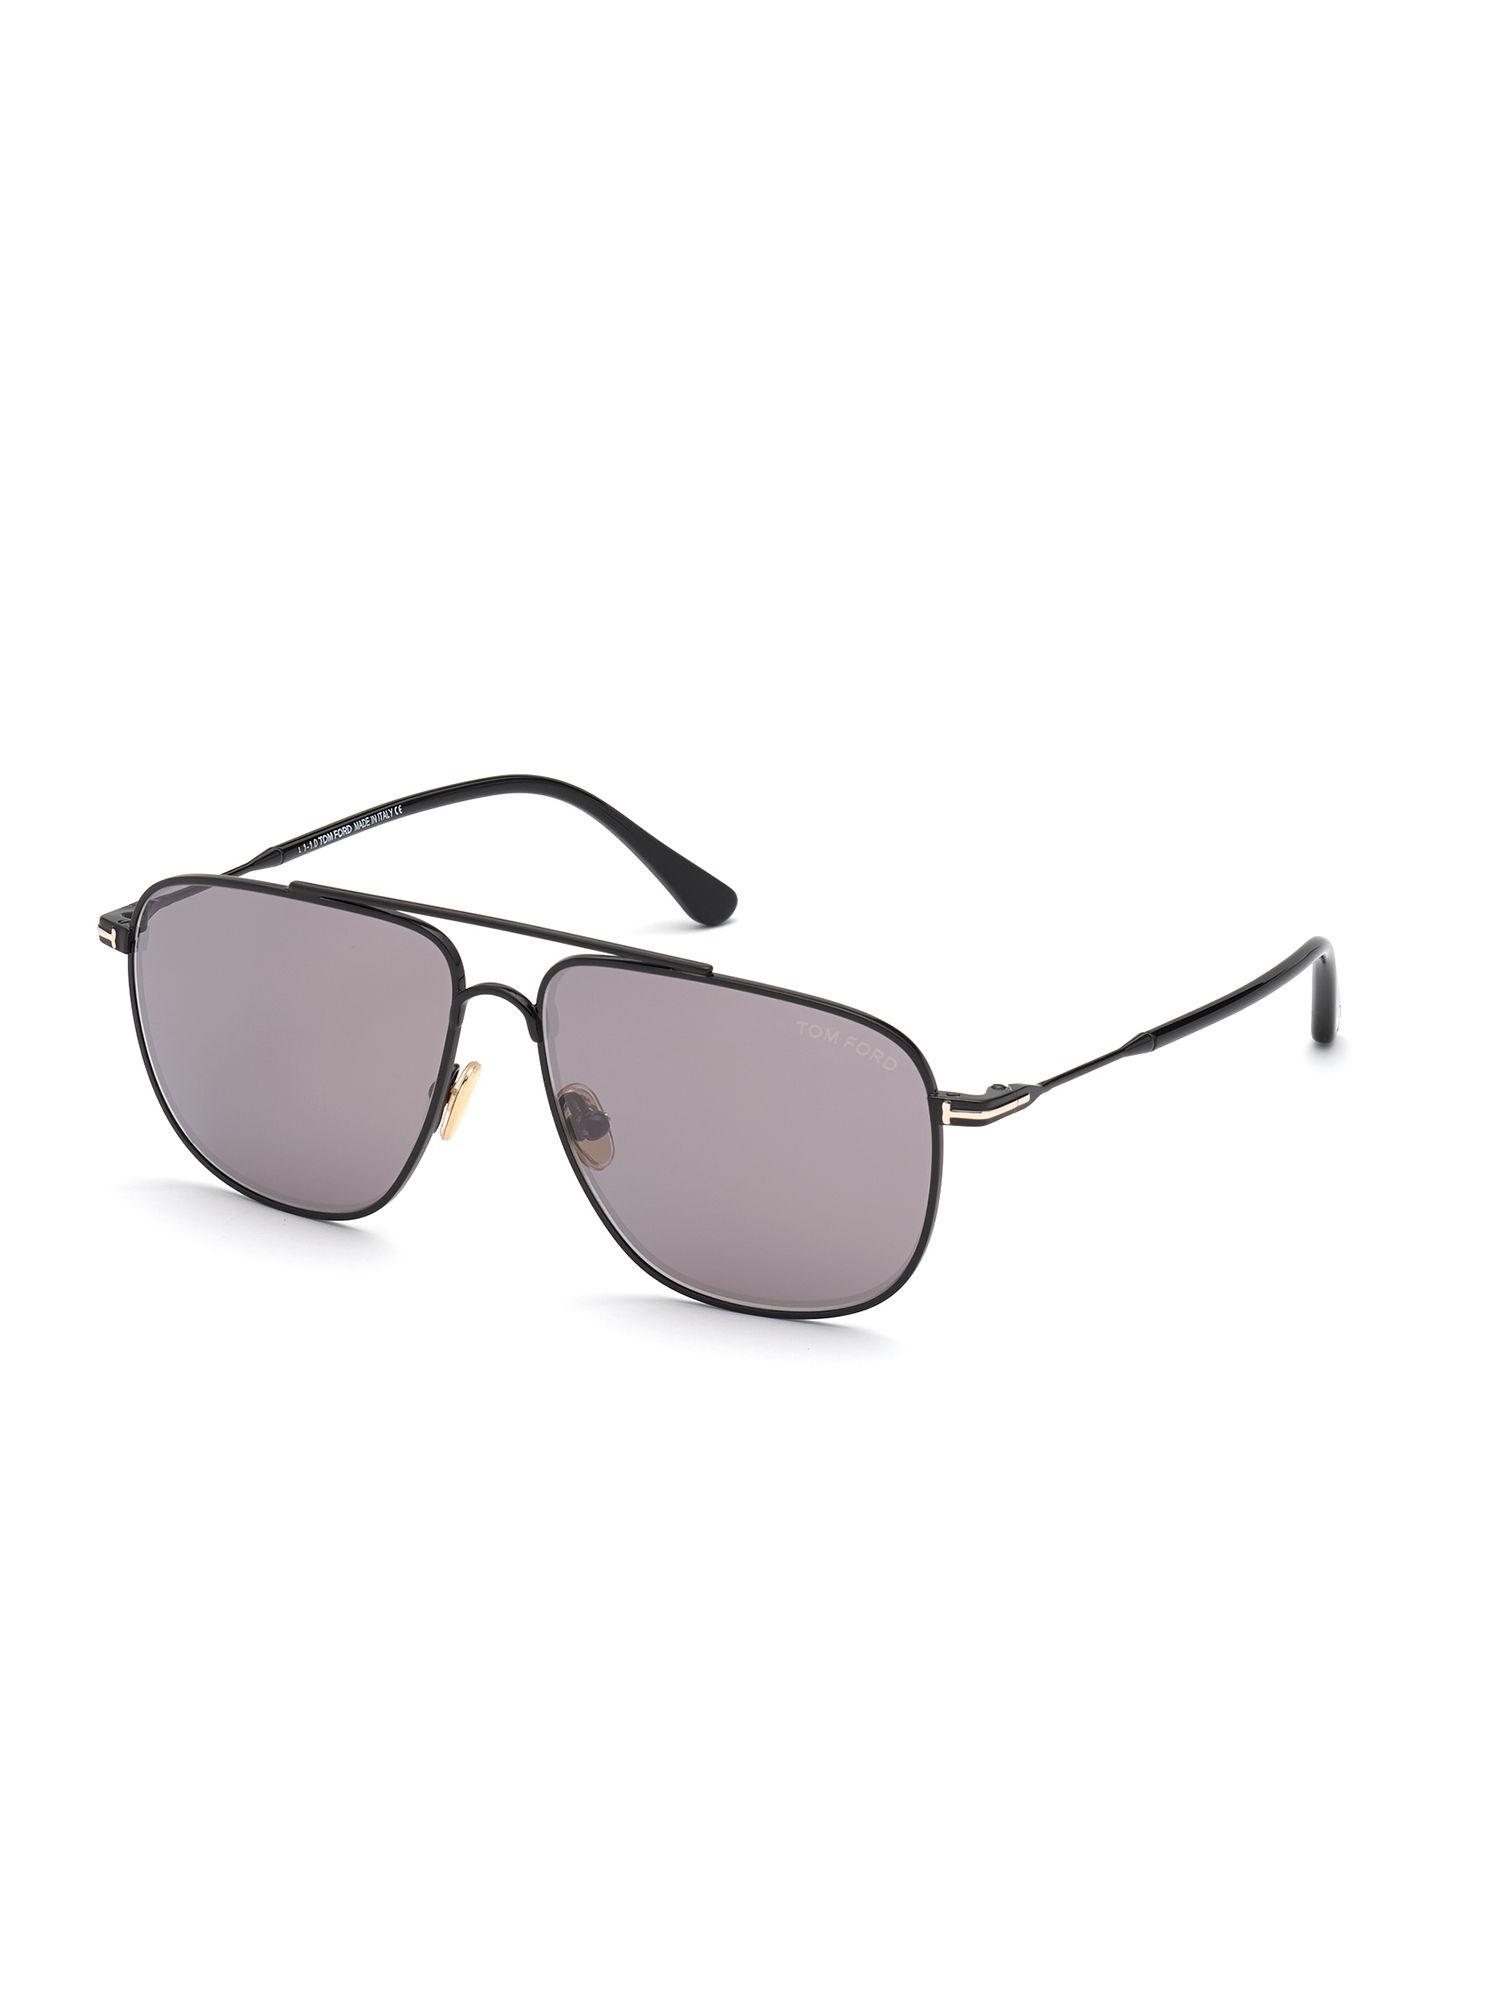 black-metal-sunglasses-ft0815-58-01c